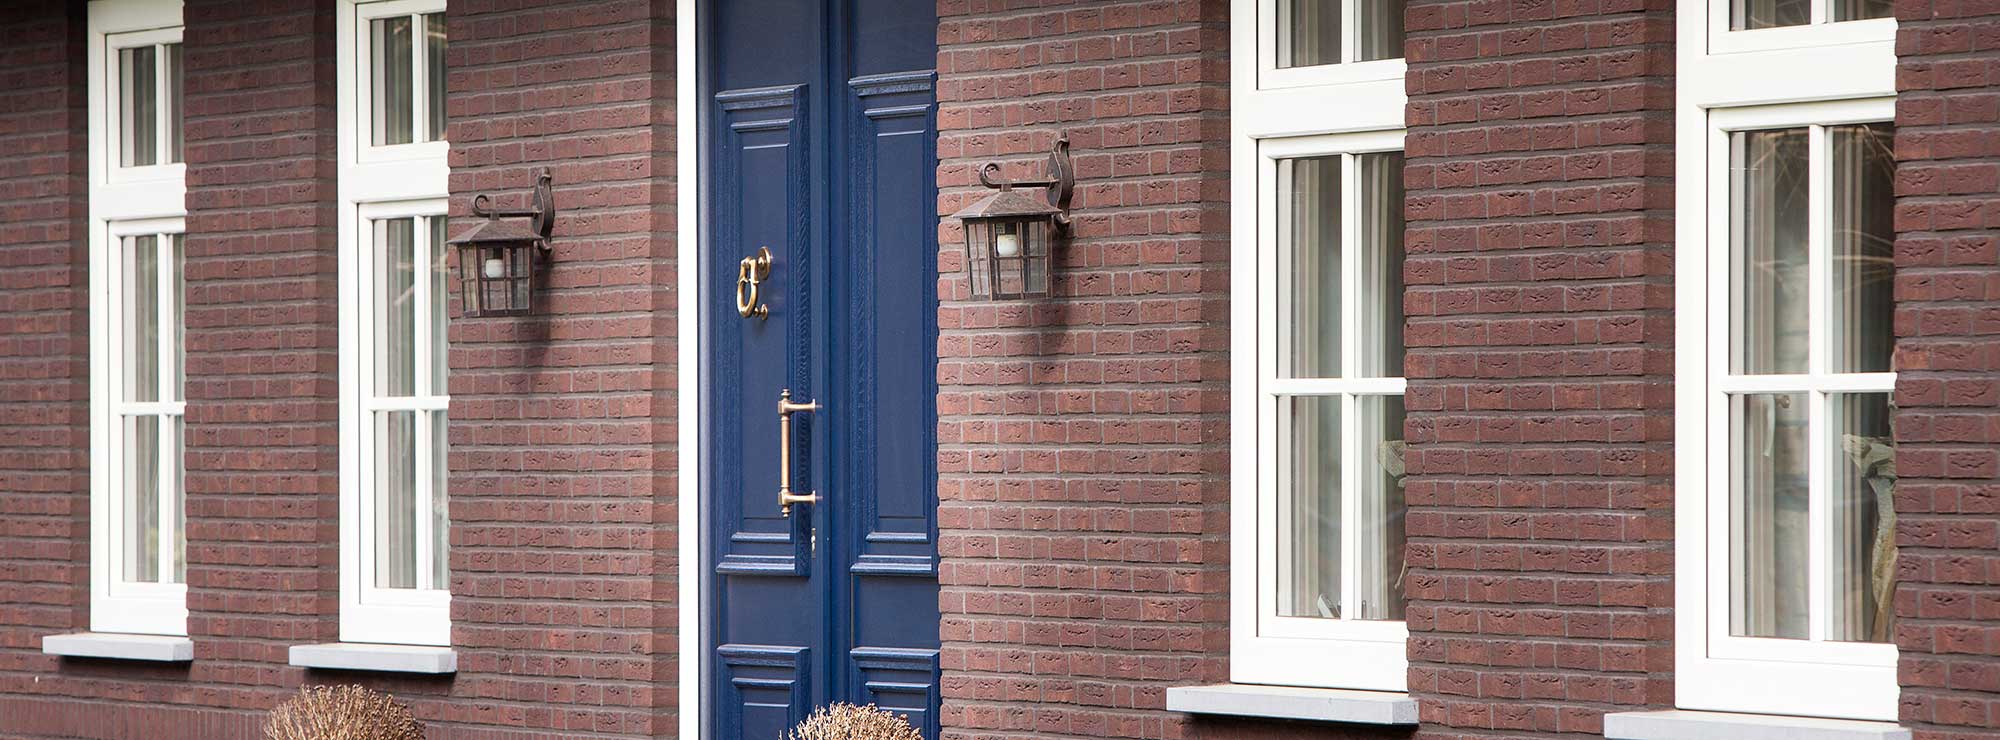 Klassieke kunststof voordeur in stijlvol diepblauw.